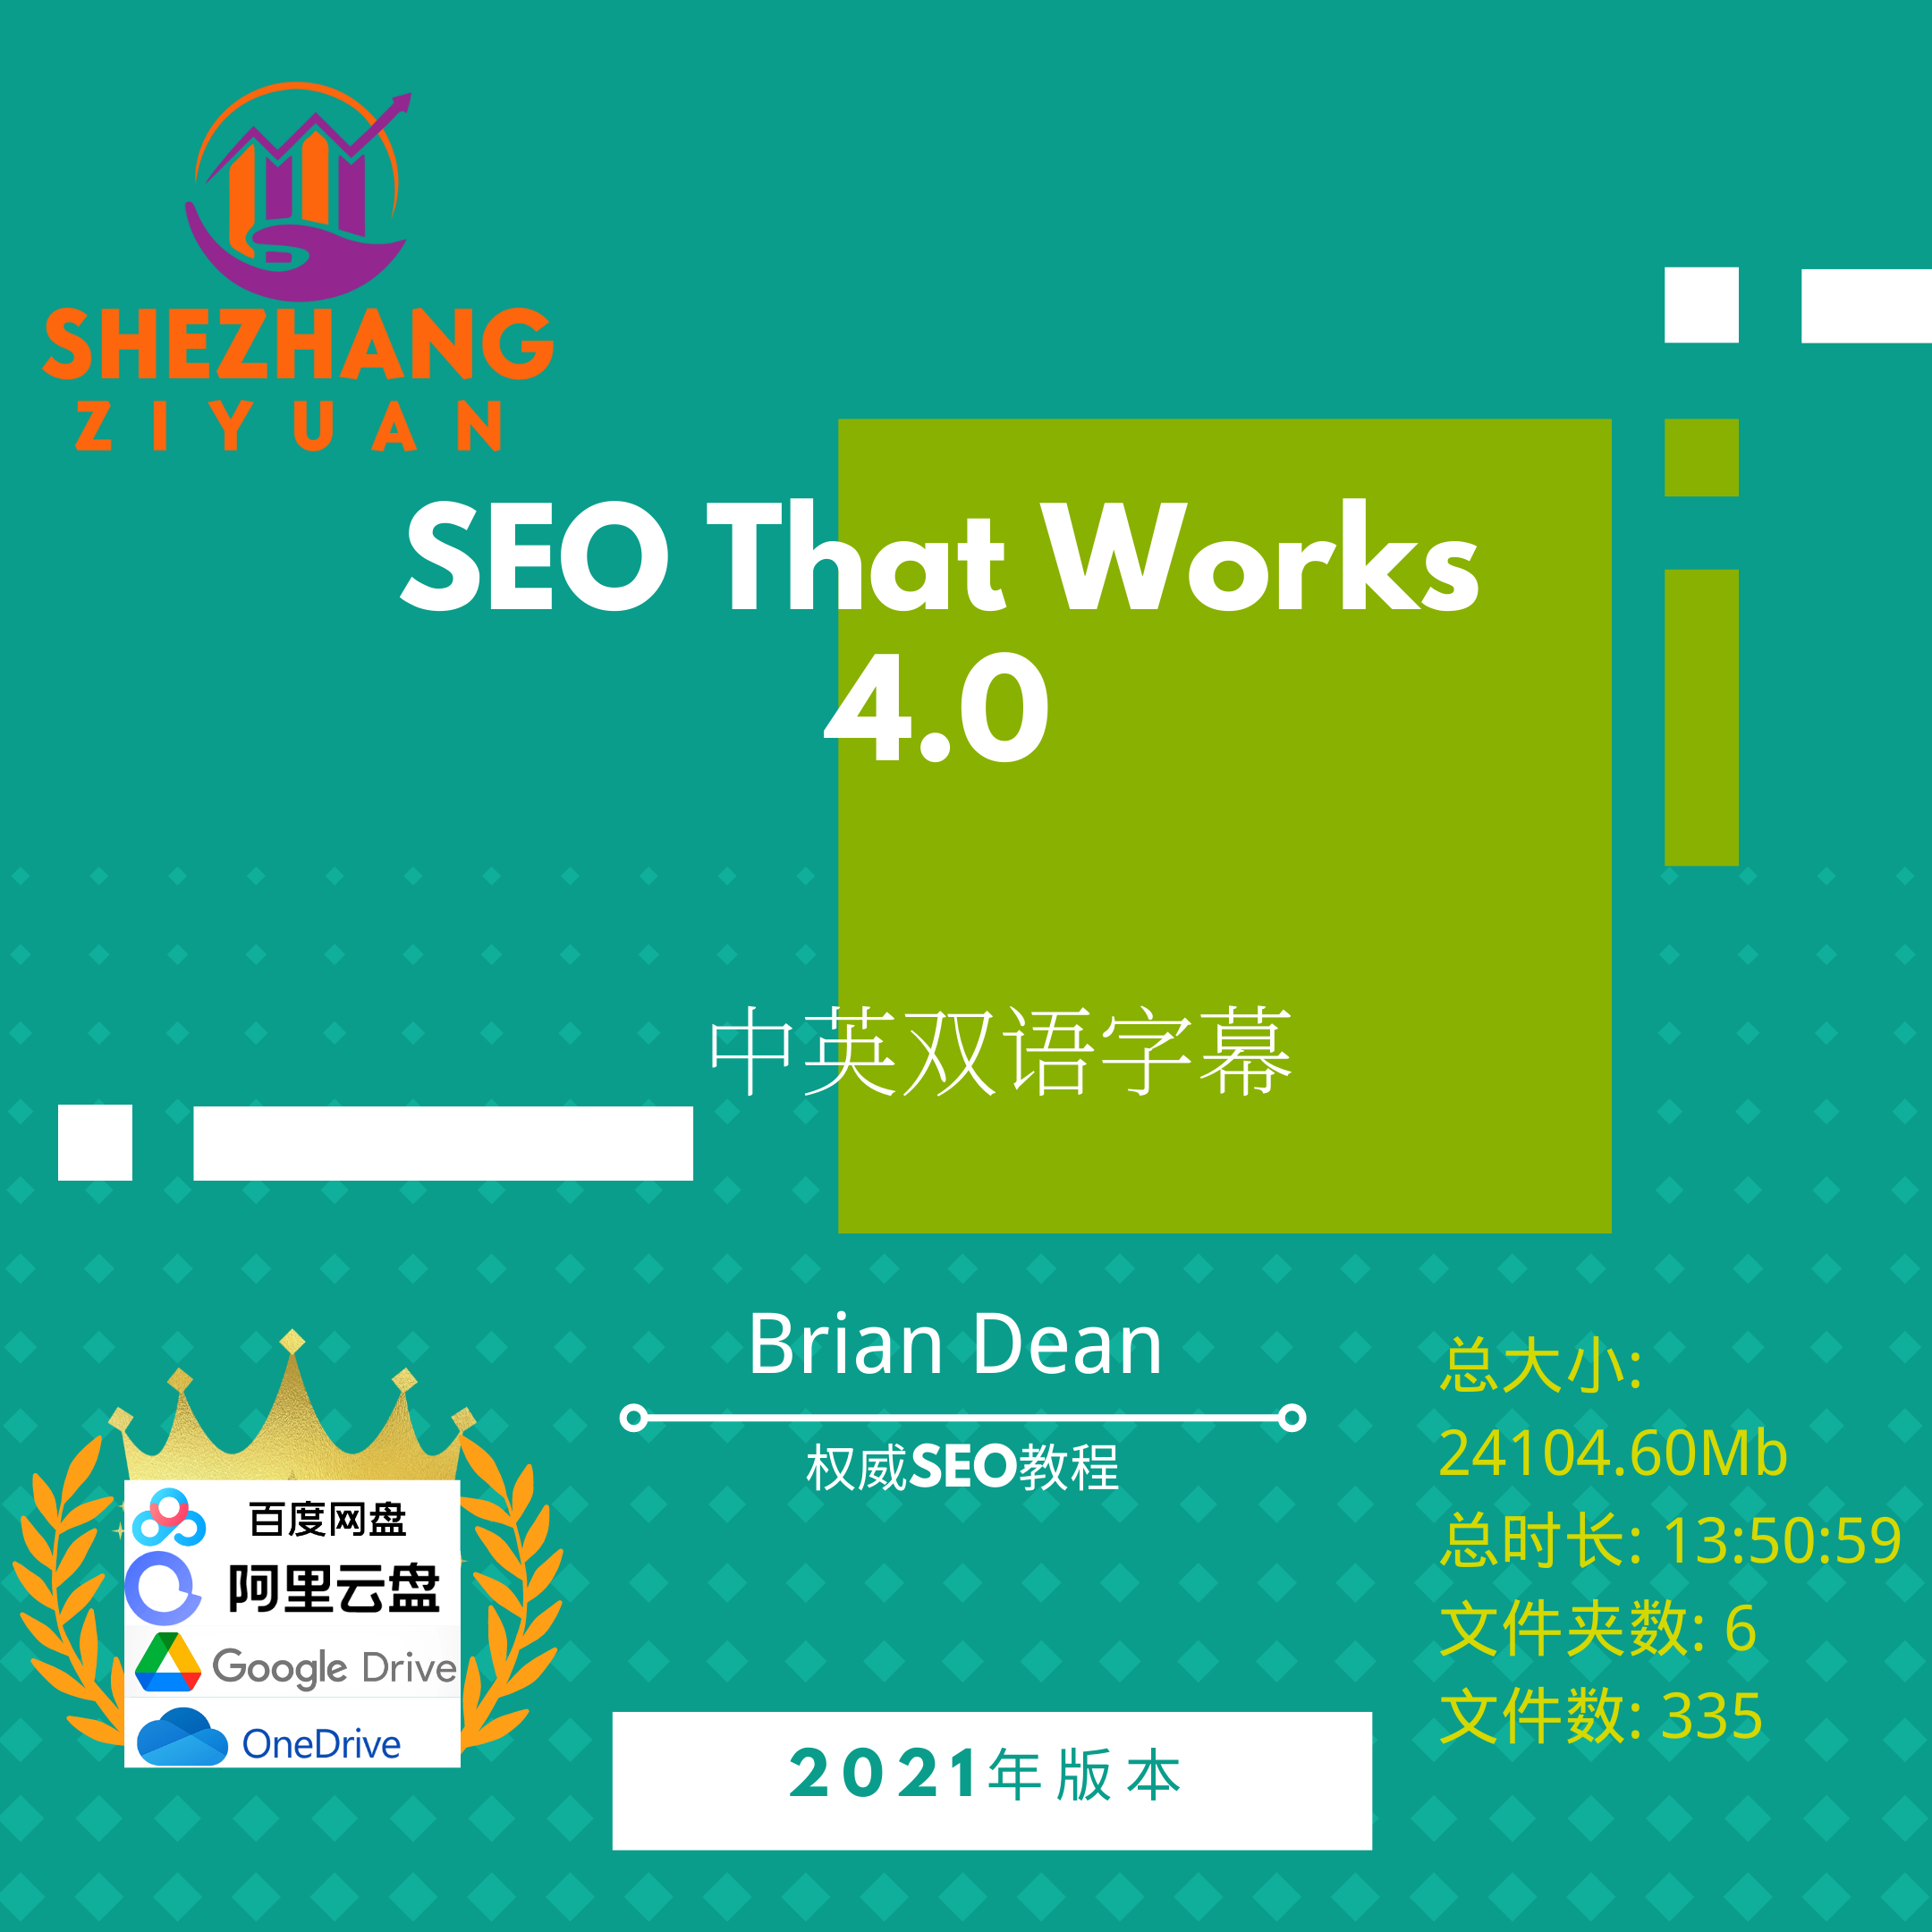 Brian Dean - SEO That Works 4.0 权威SEO教程niche站-第一书单资源